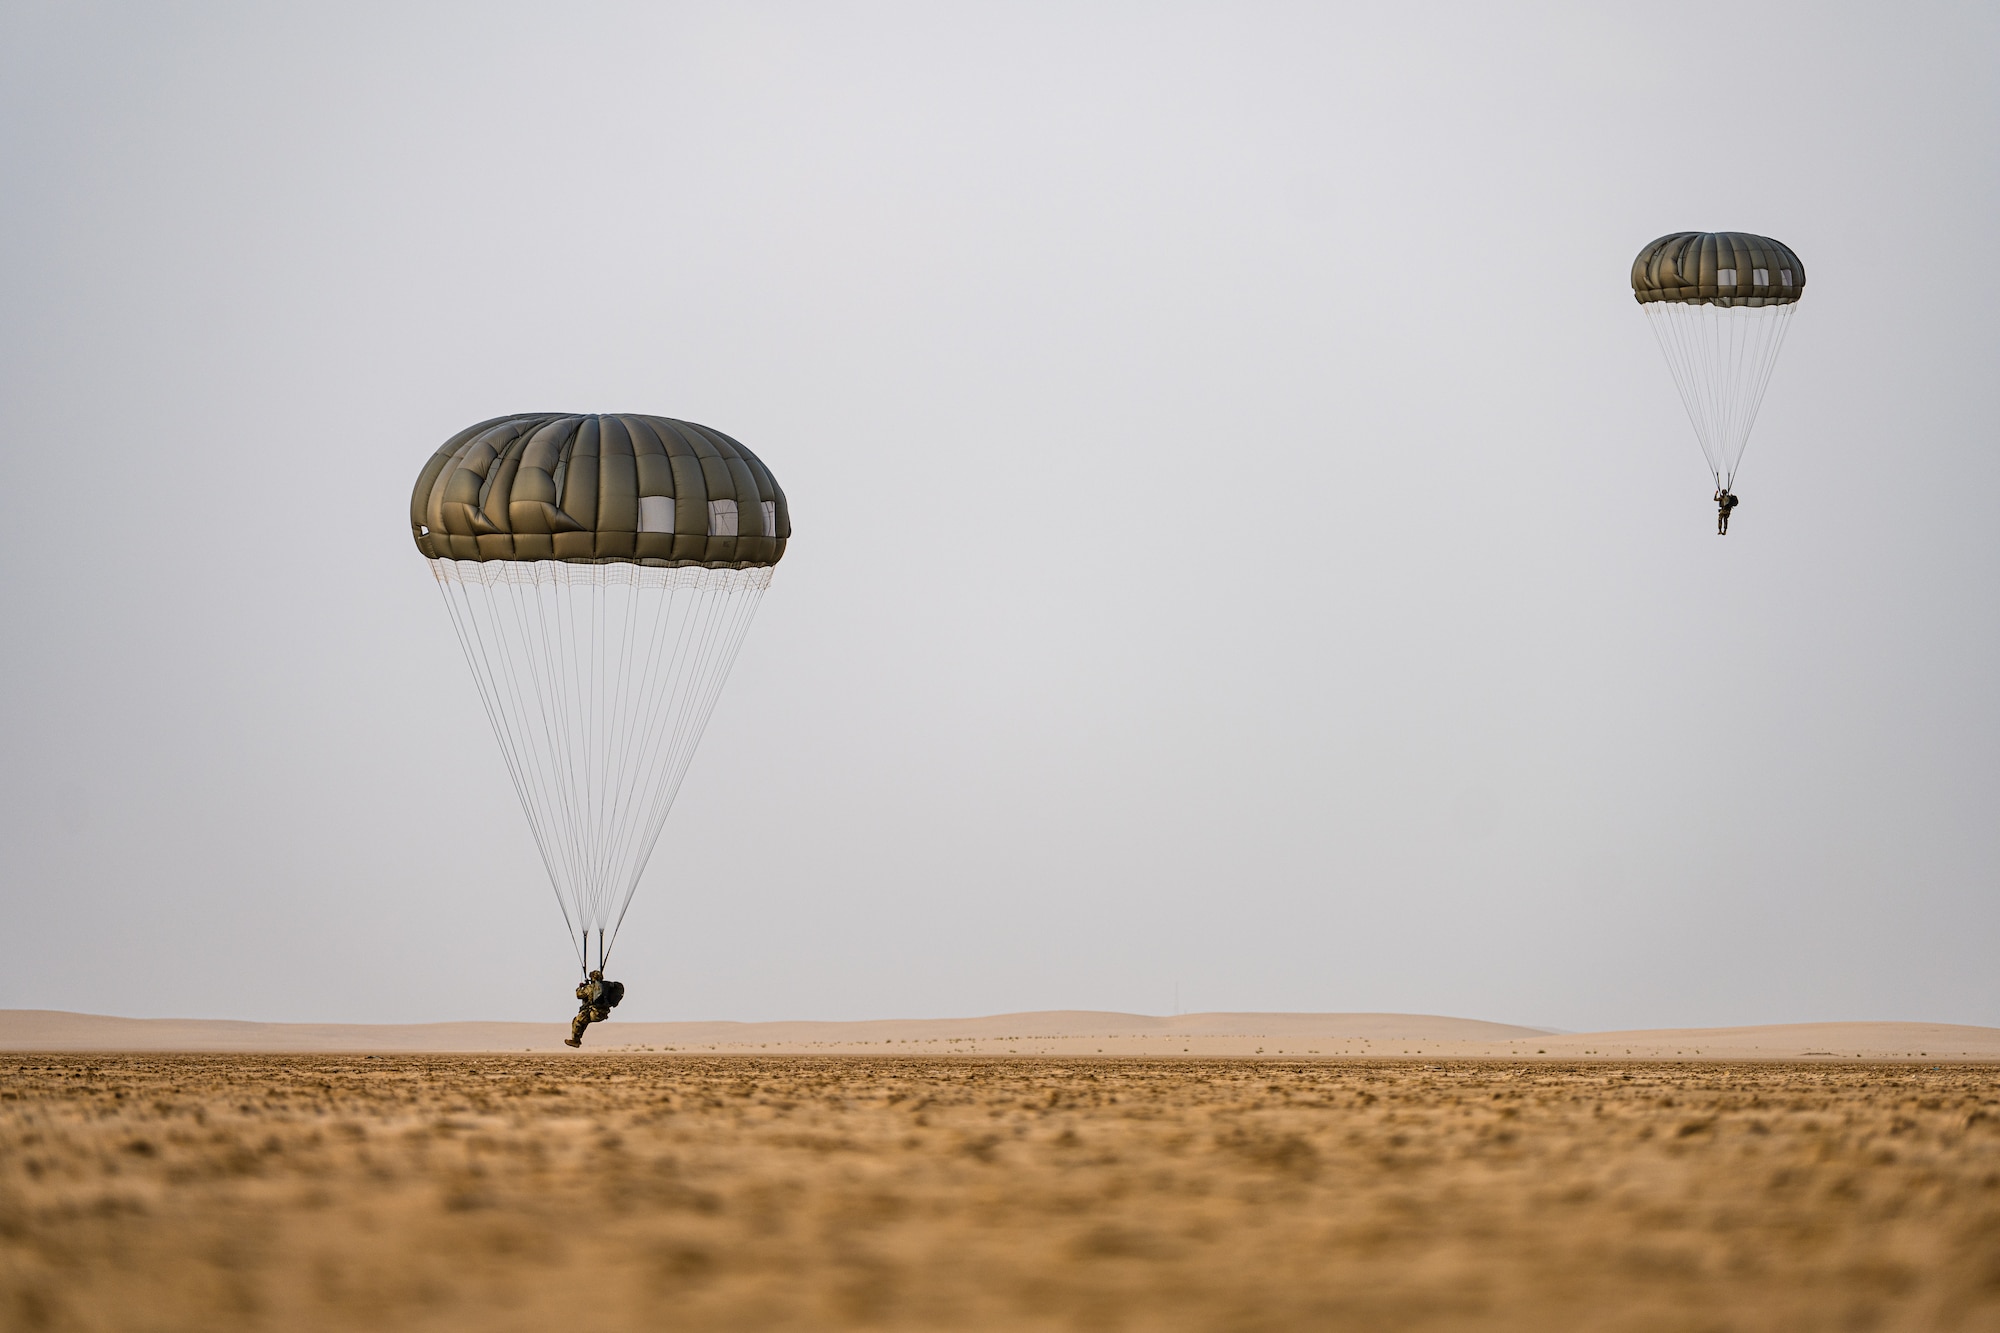 Paratroopers descending above the desert